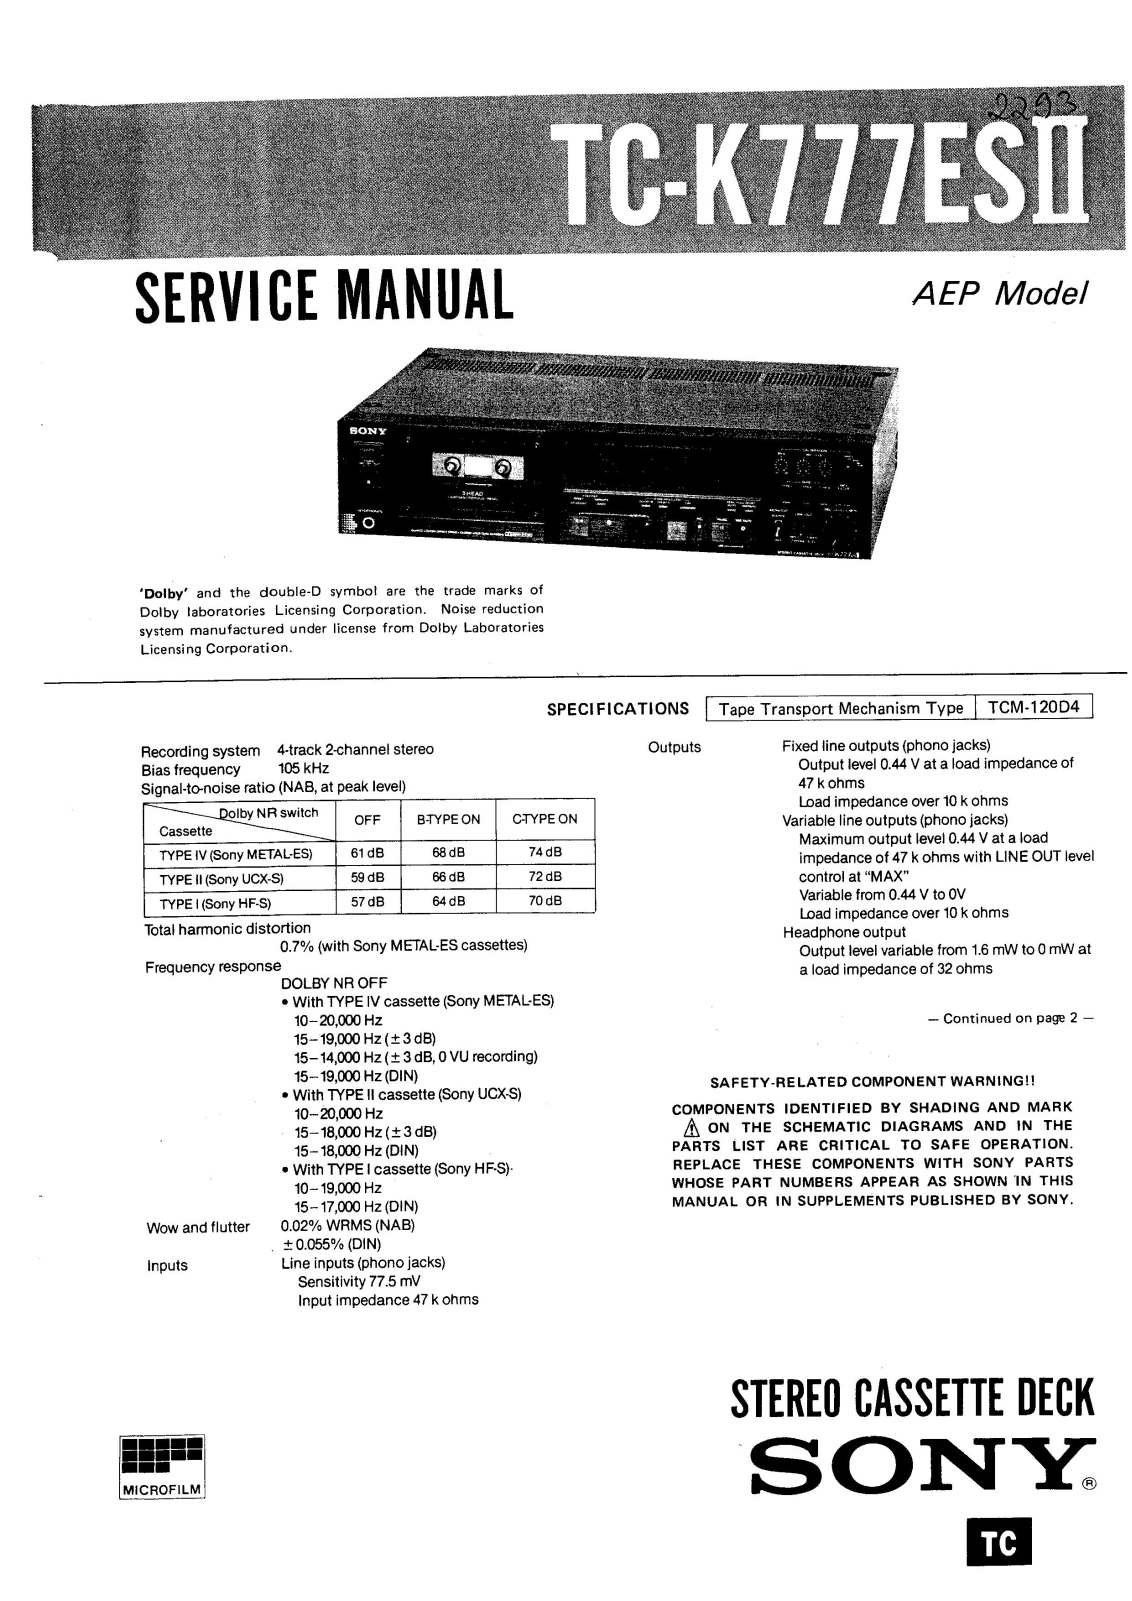 Sony TC-K777ESII Service Manual